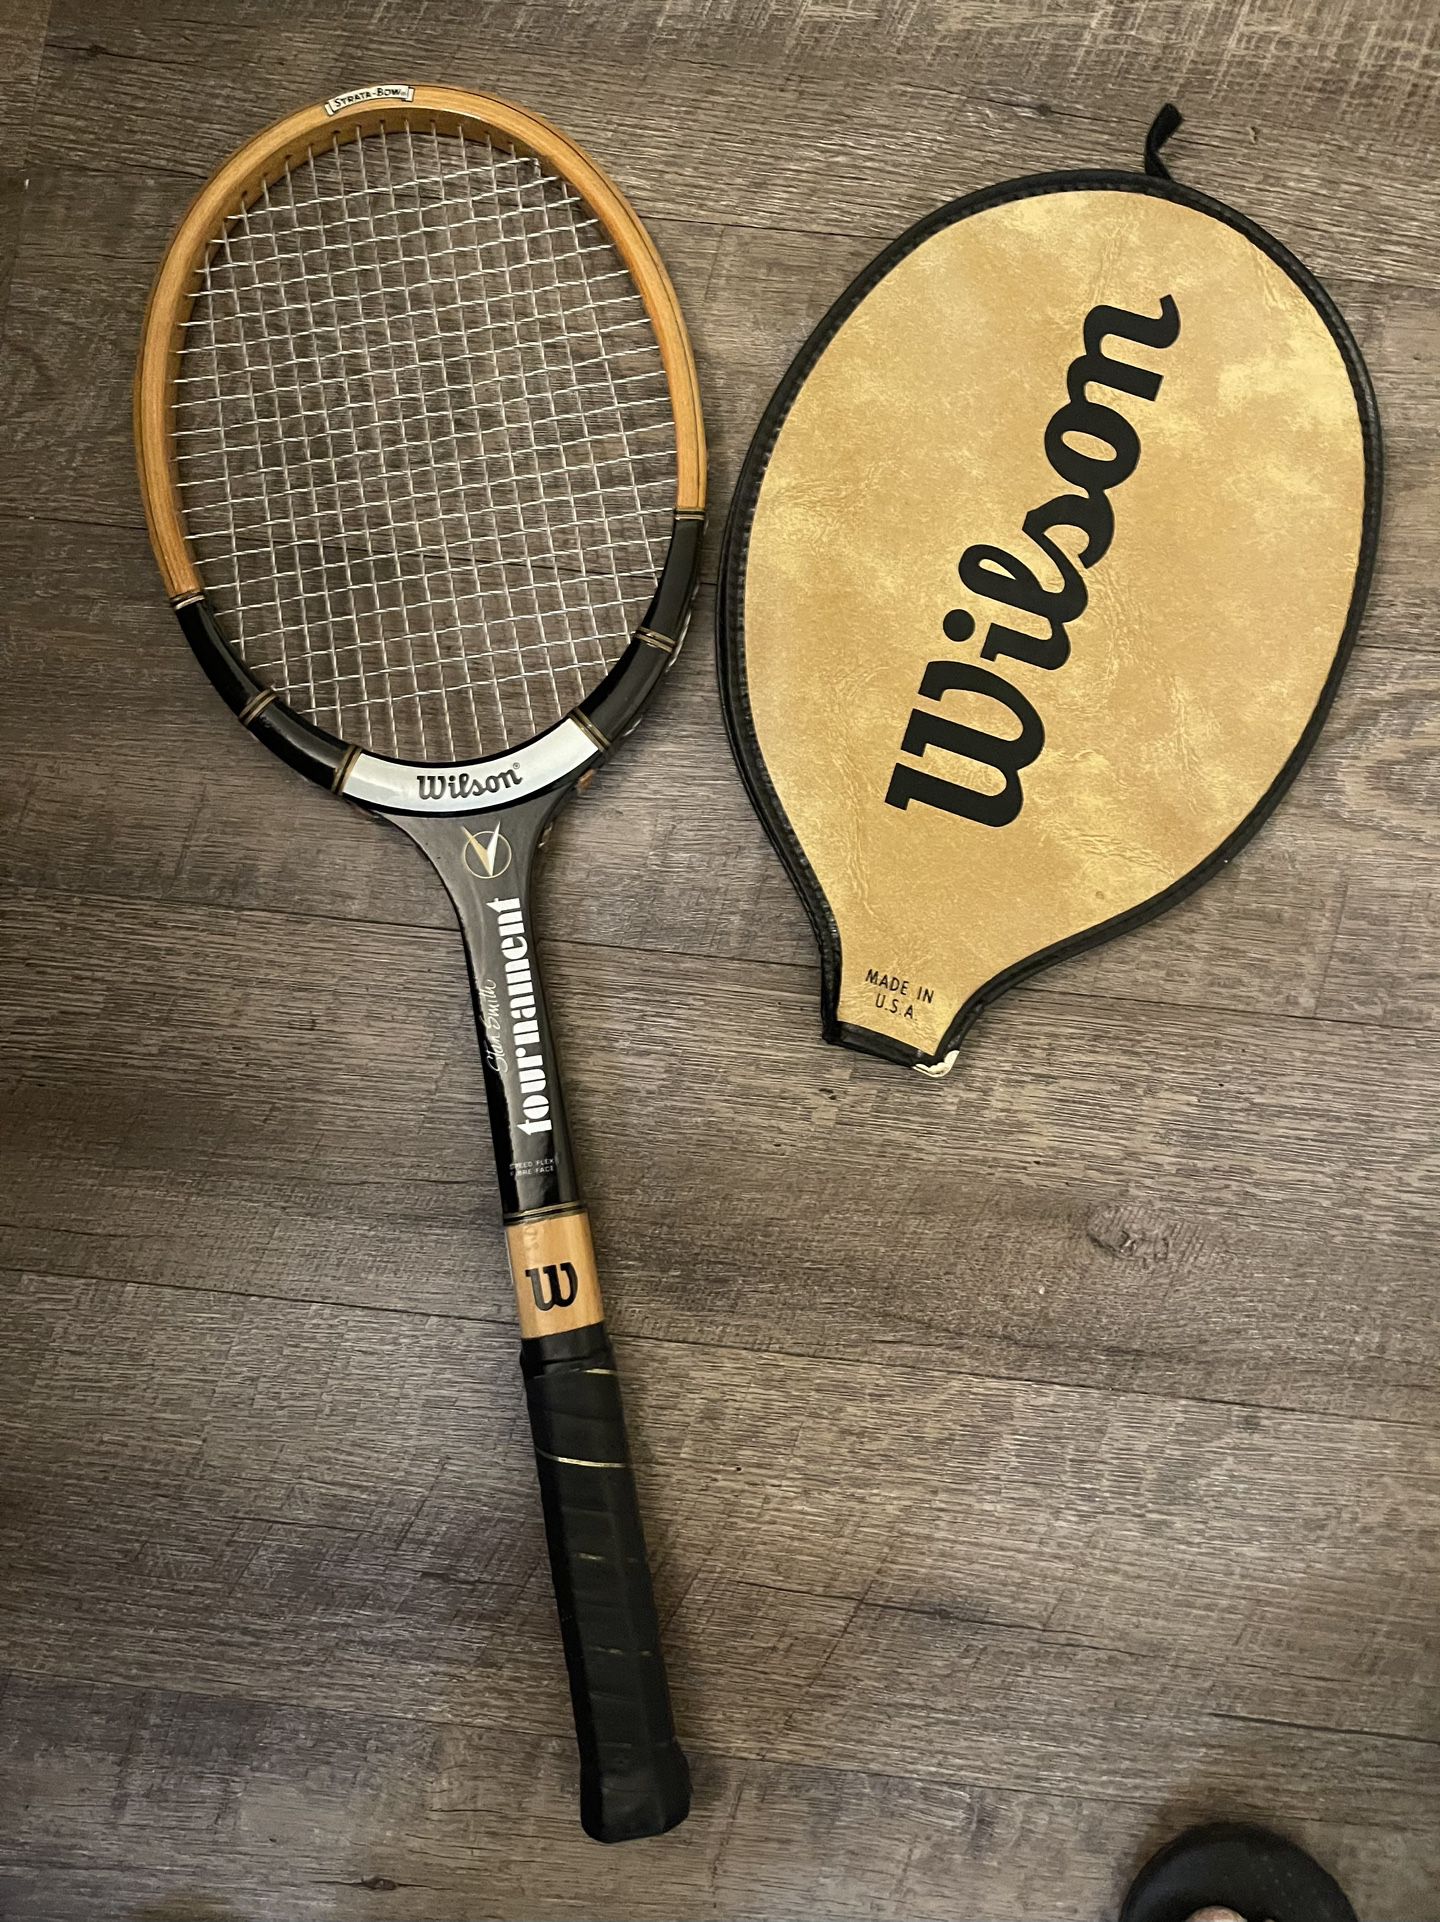 Wilson Tennis Racket, Tennis, Vintage Decorative